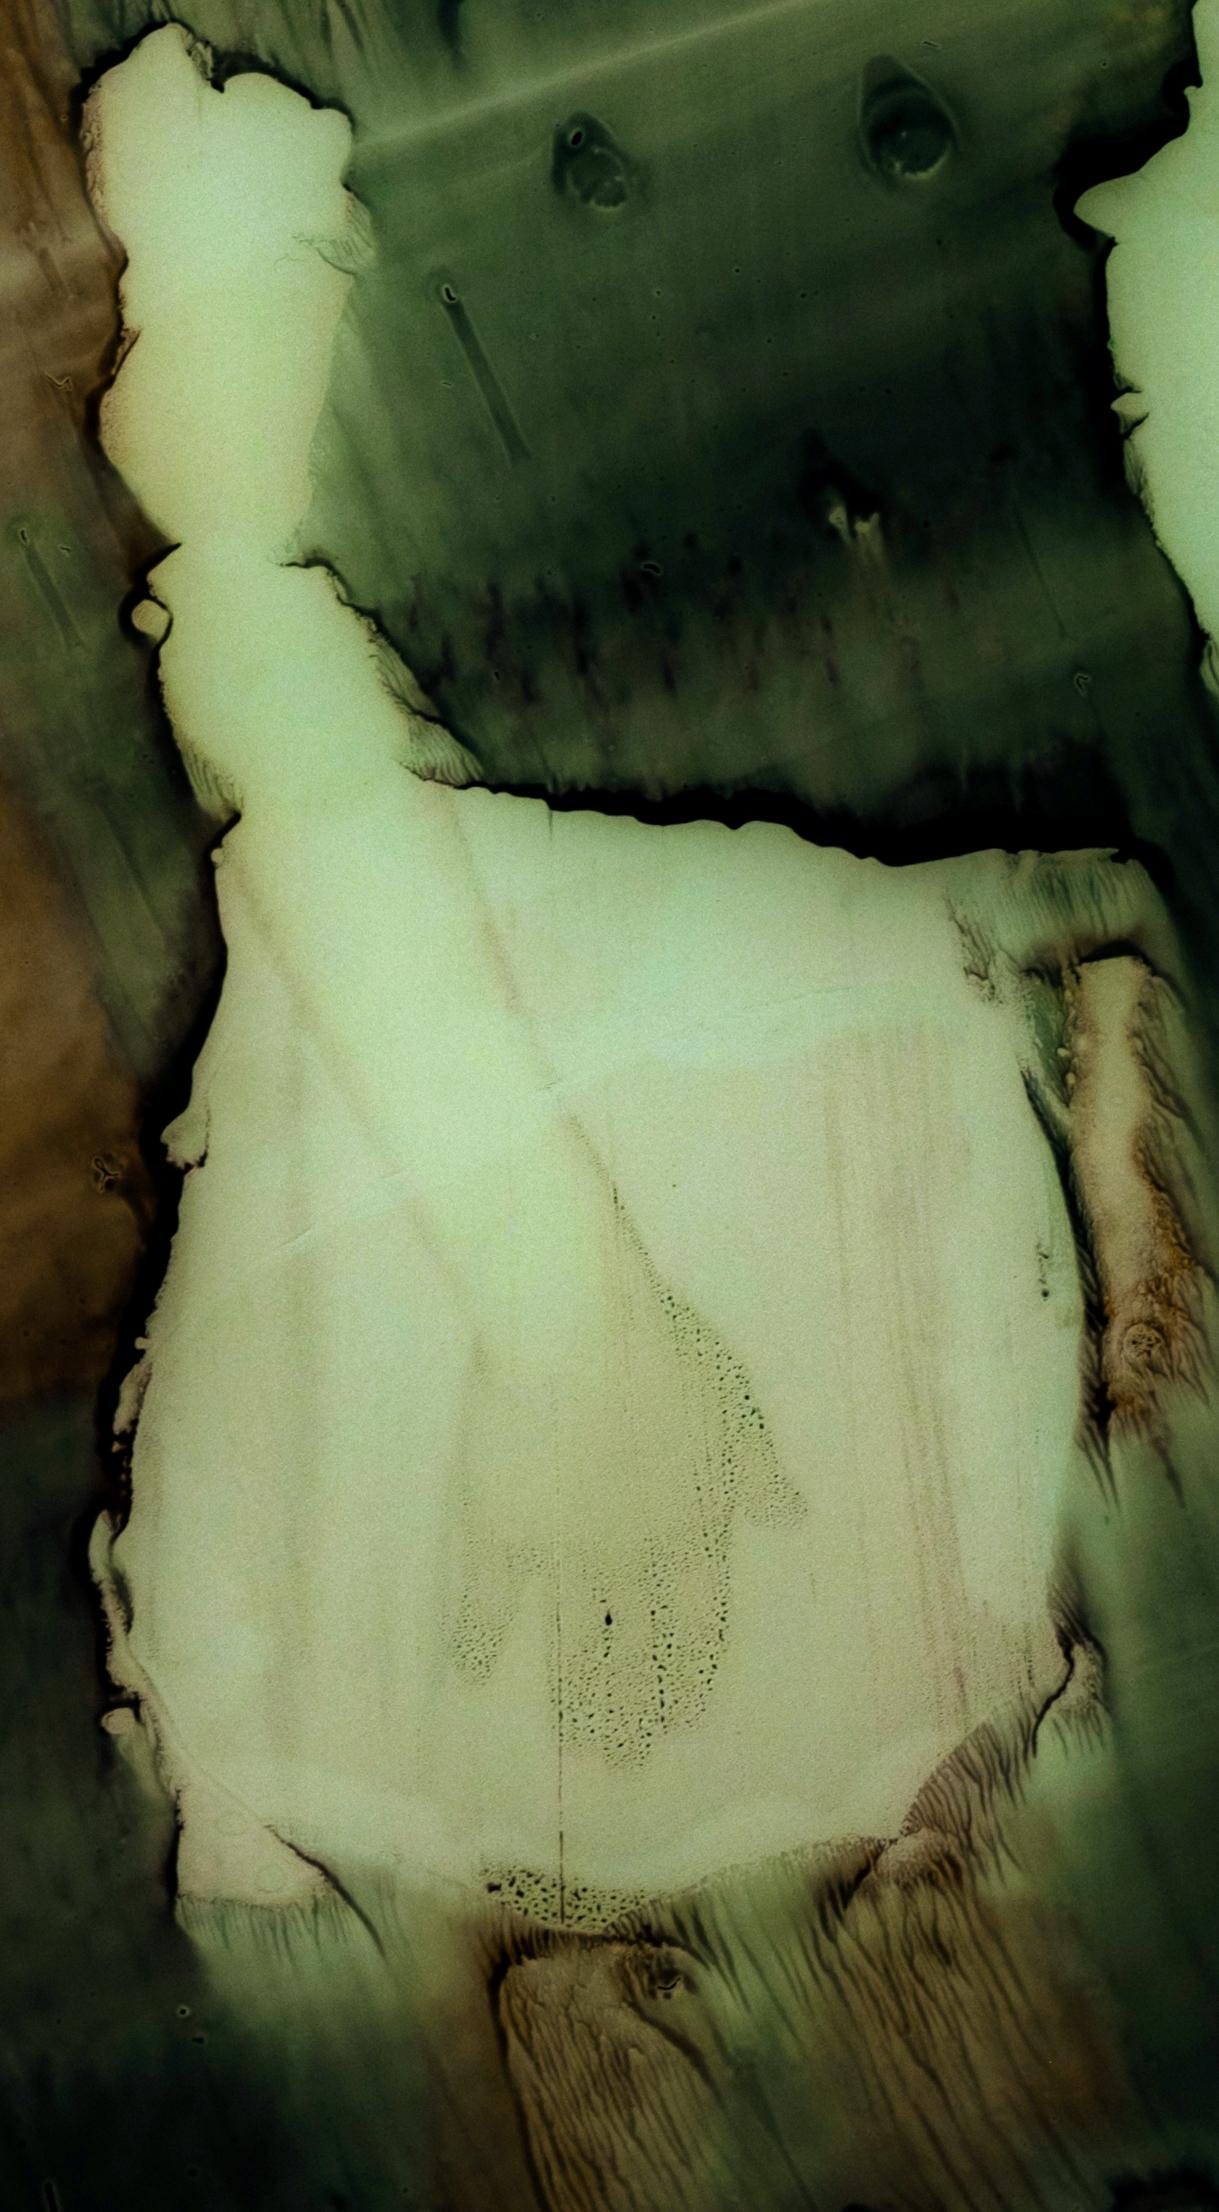 Seba KURTIS (*1974, Argentina)
Novichok poison victim Dawn Sturgess, from the series 'Chemical Reaction', 2022
Lambda C-Type print on 3mm aluminium
Sheet 91.4 x 61 cm (36 x 24 in.)
Edition of 7
Print only

Background: 
Dawn Sturgess died in 2018